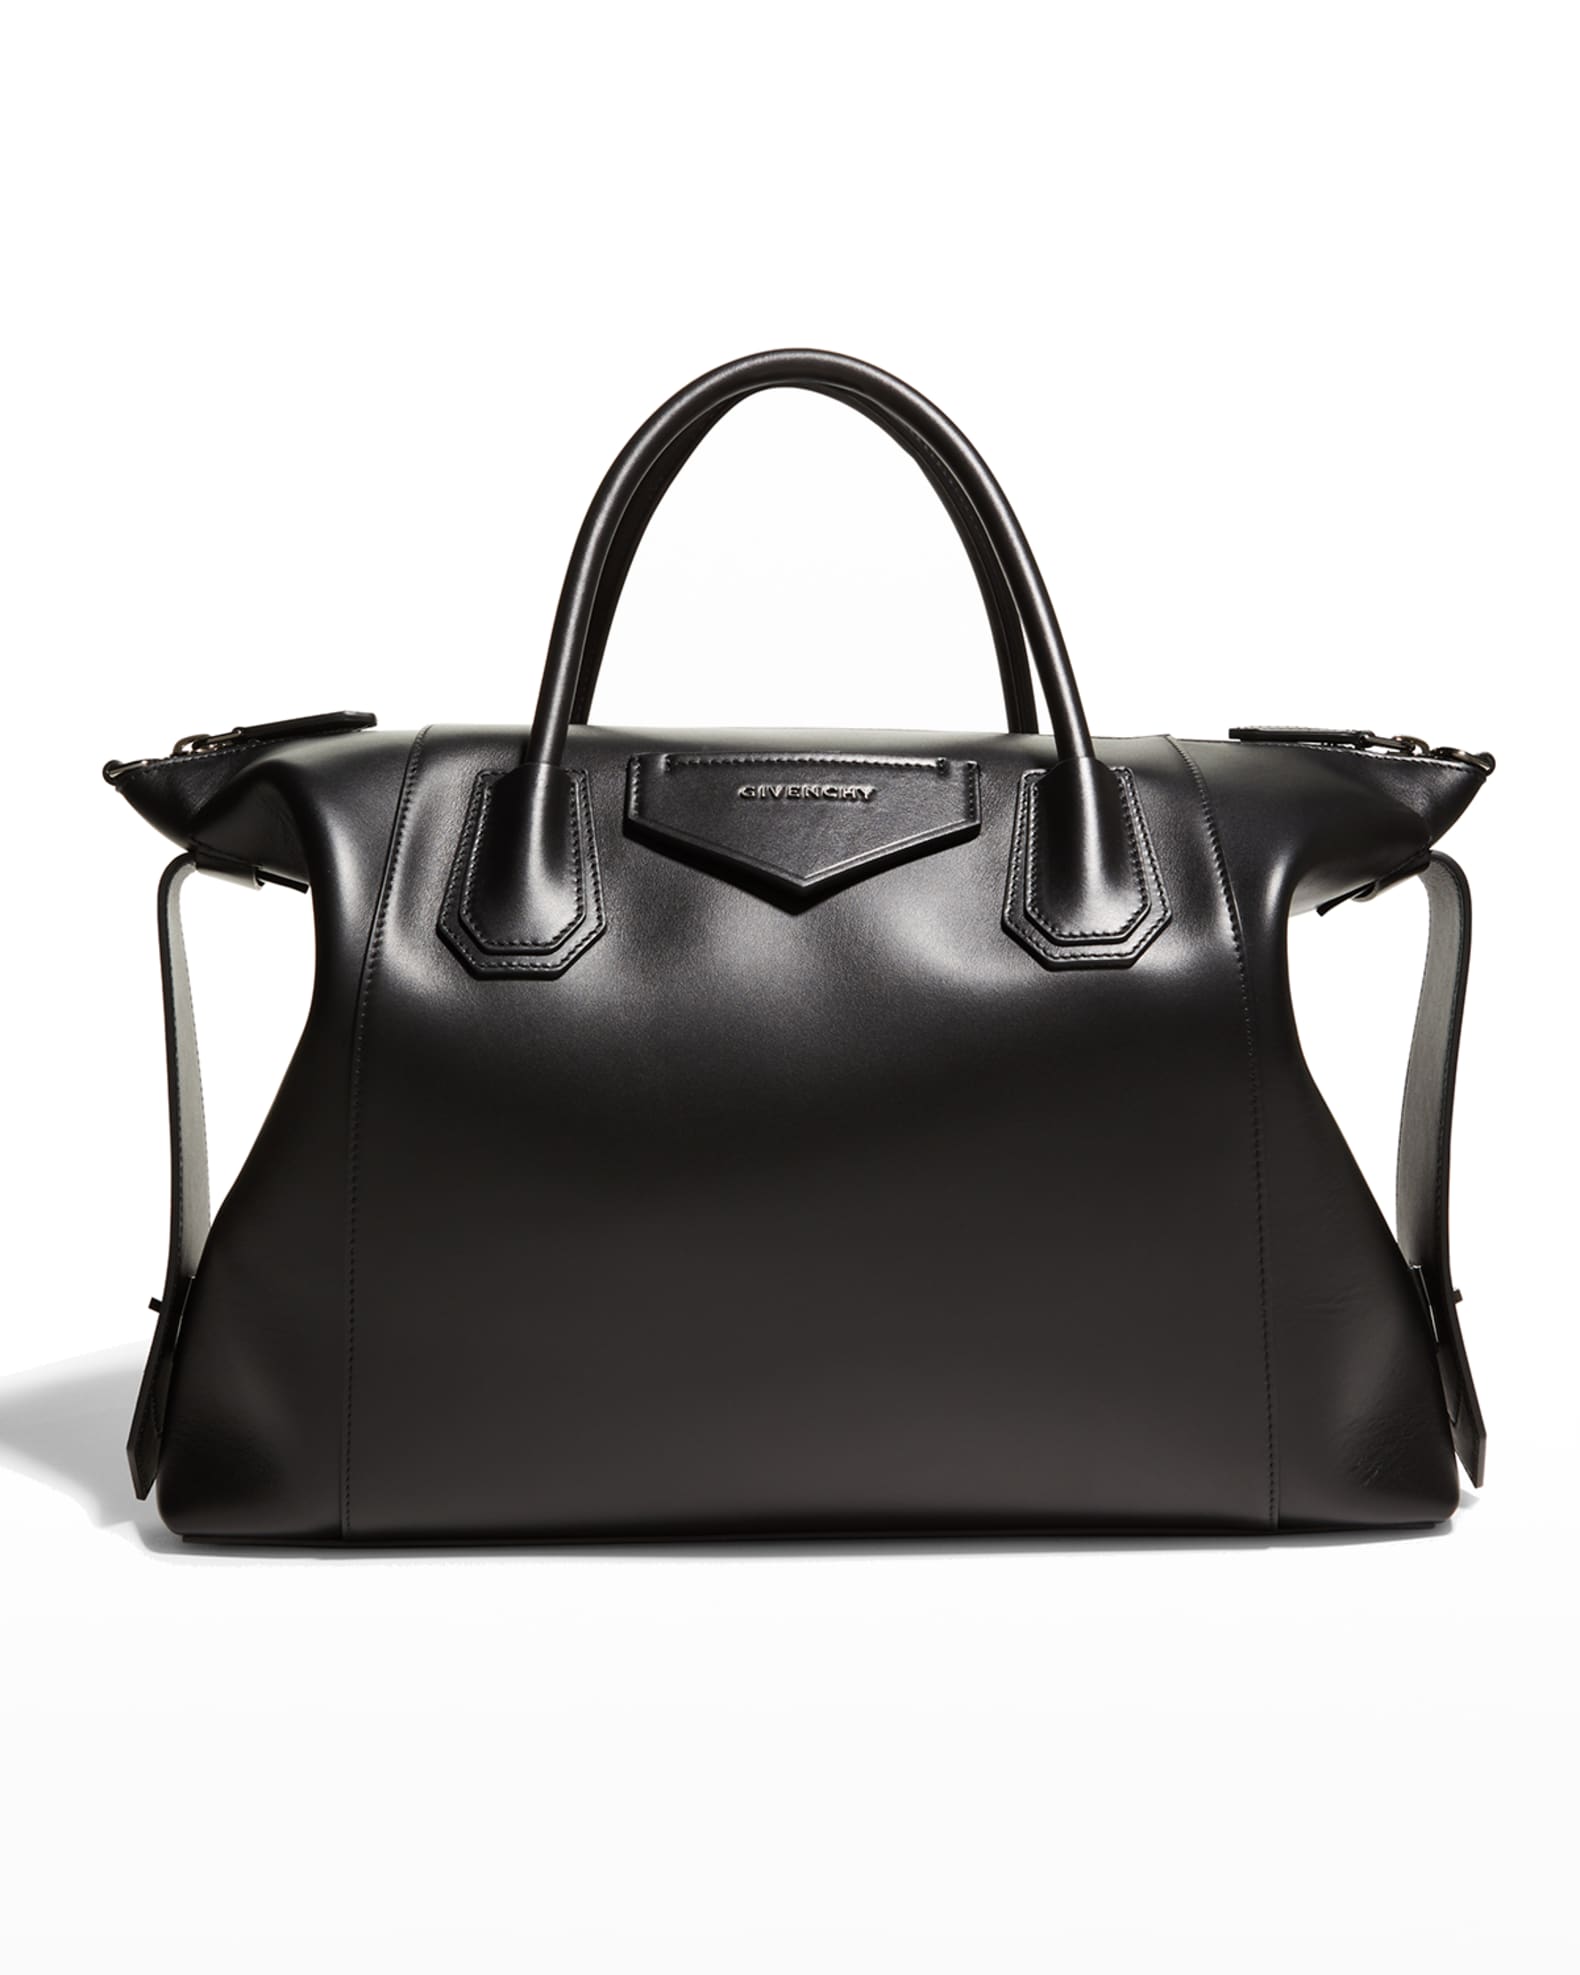 Givenchy Antigona Soft Medium Leather Bag | Neiman Marcus